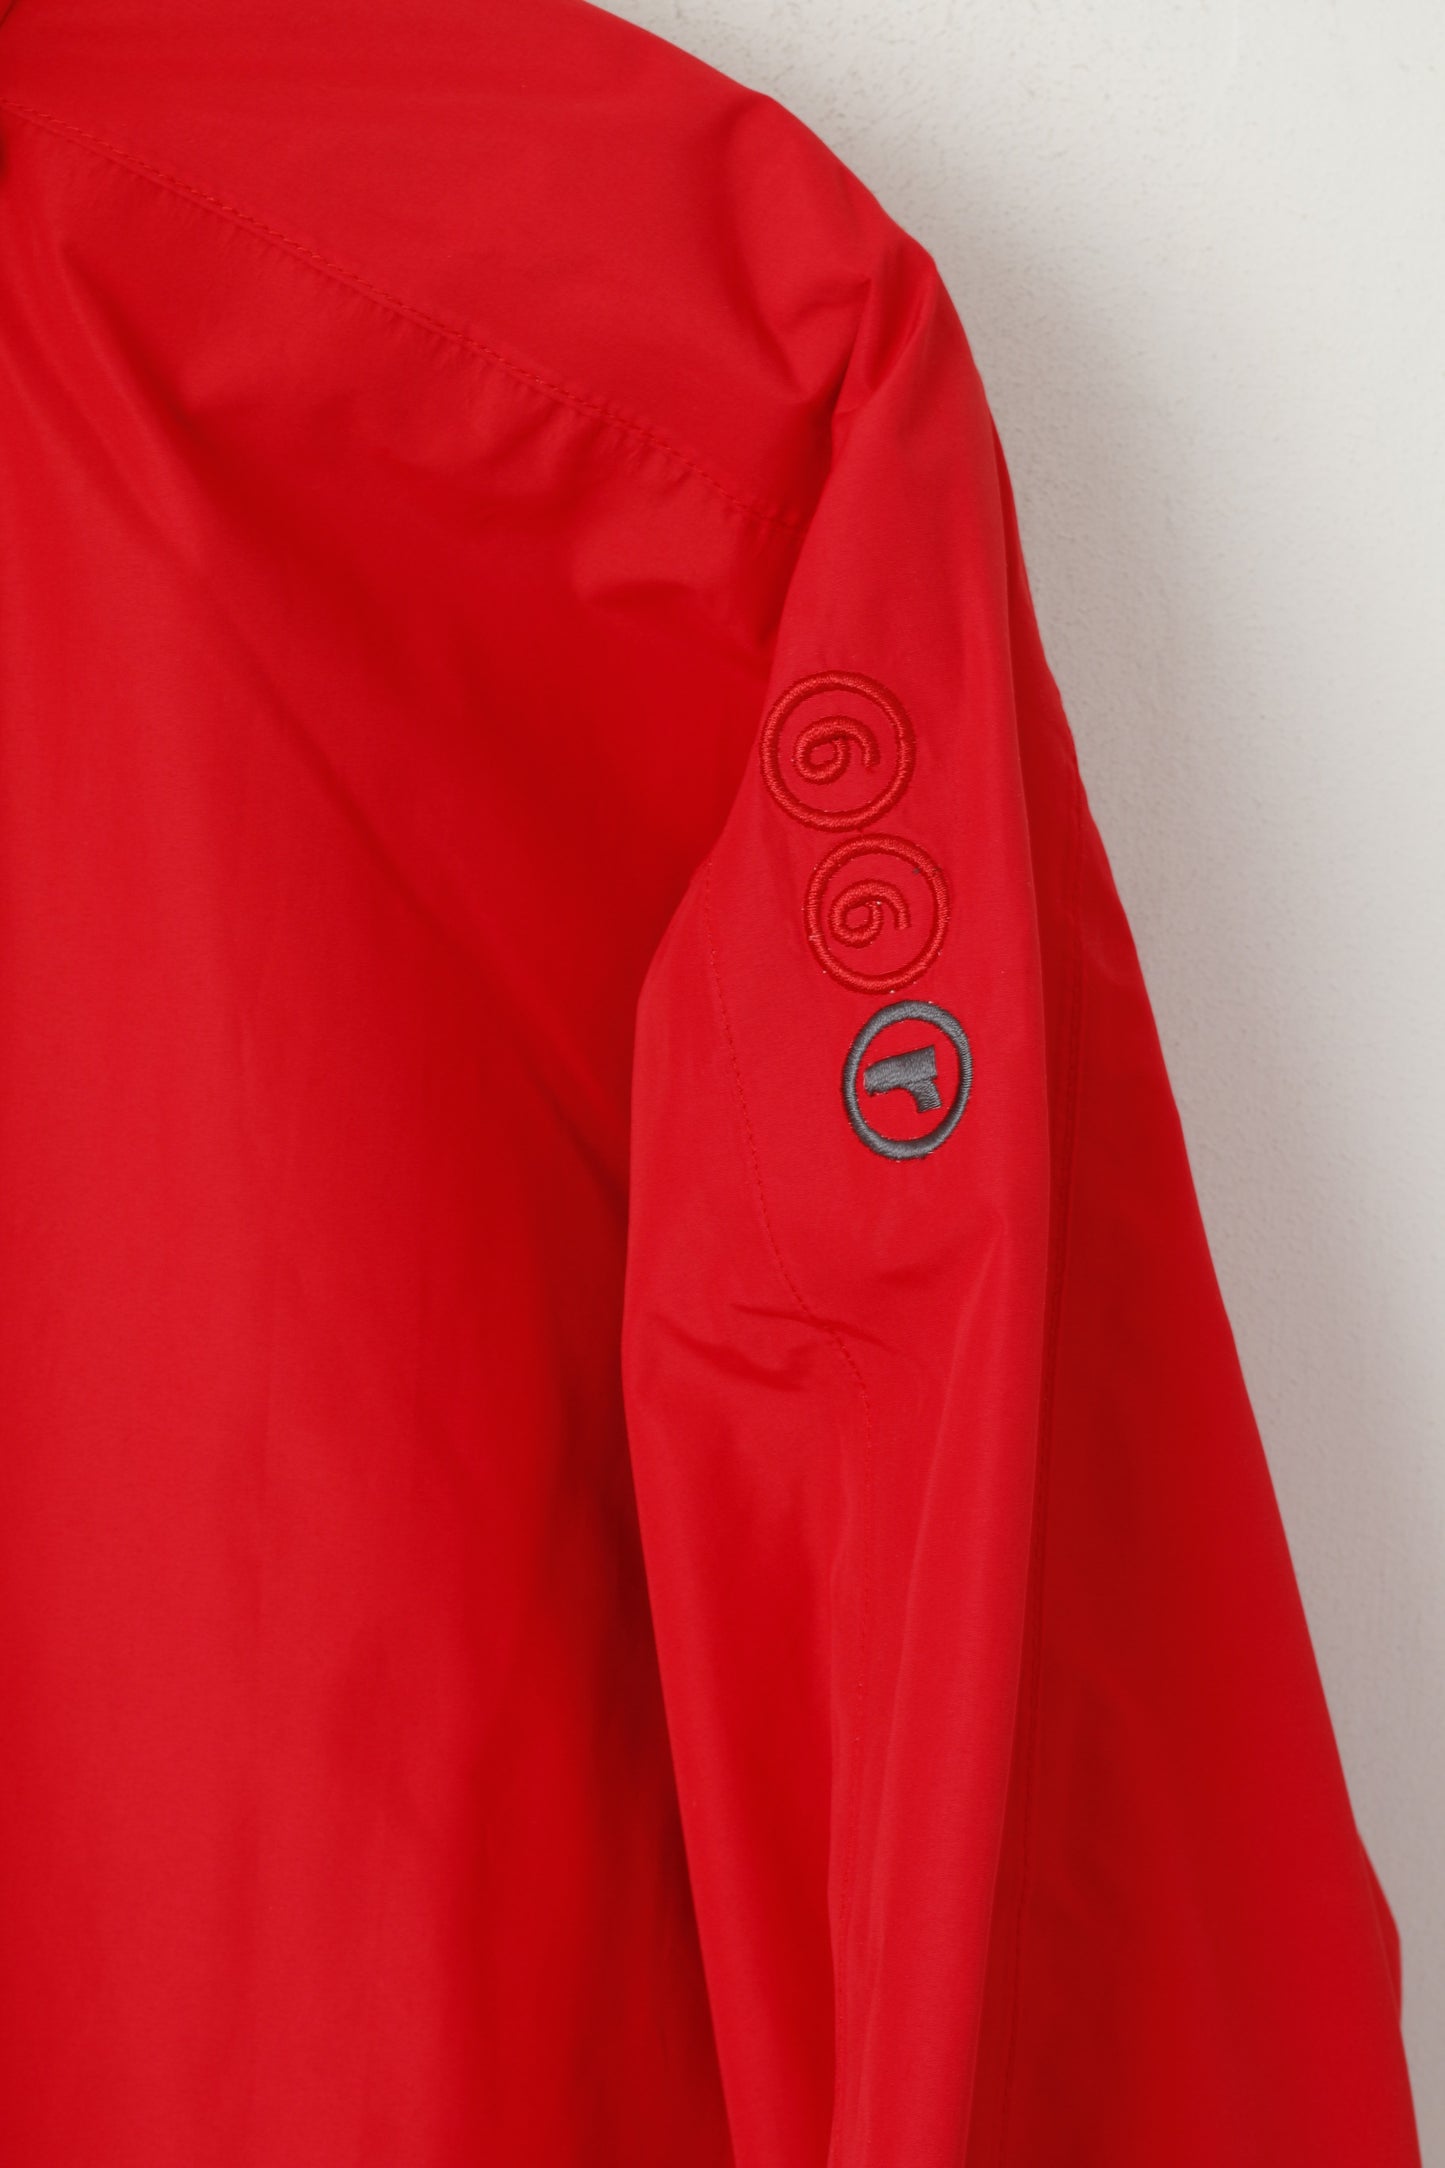 Rukka Men M Jacket Red Lightweight Full Zipper Holzbau AG Sportswear Outdoor Top